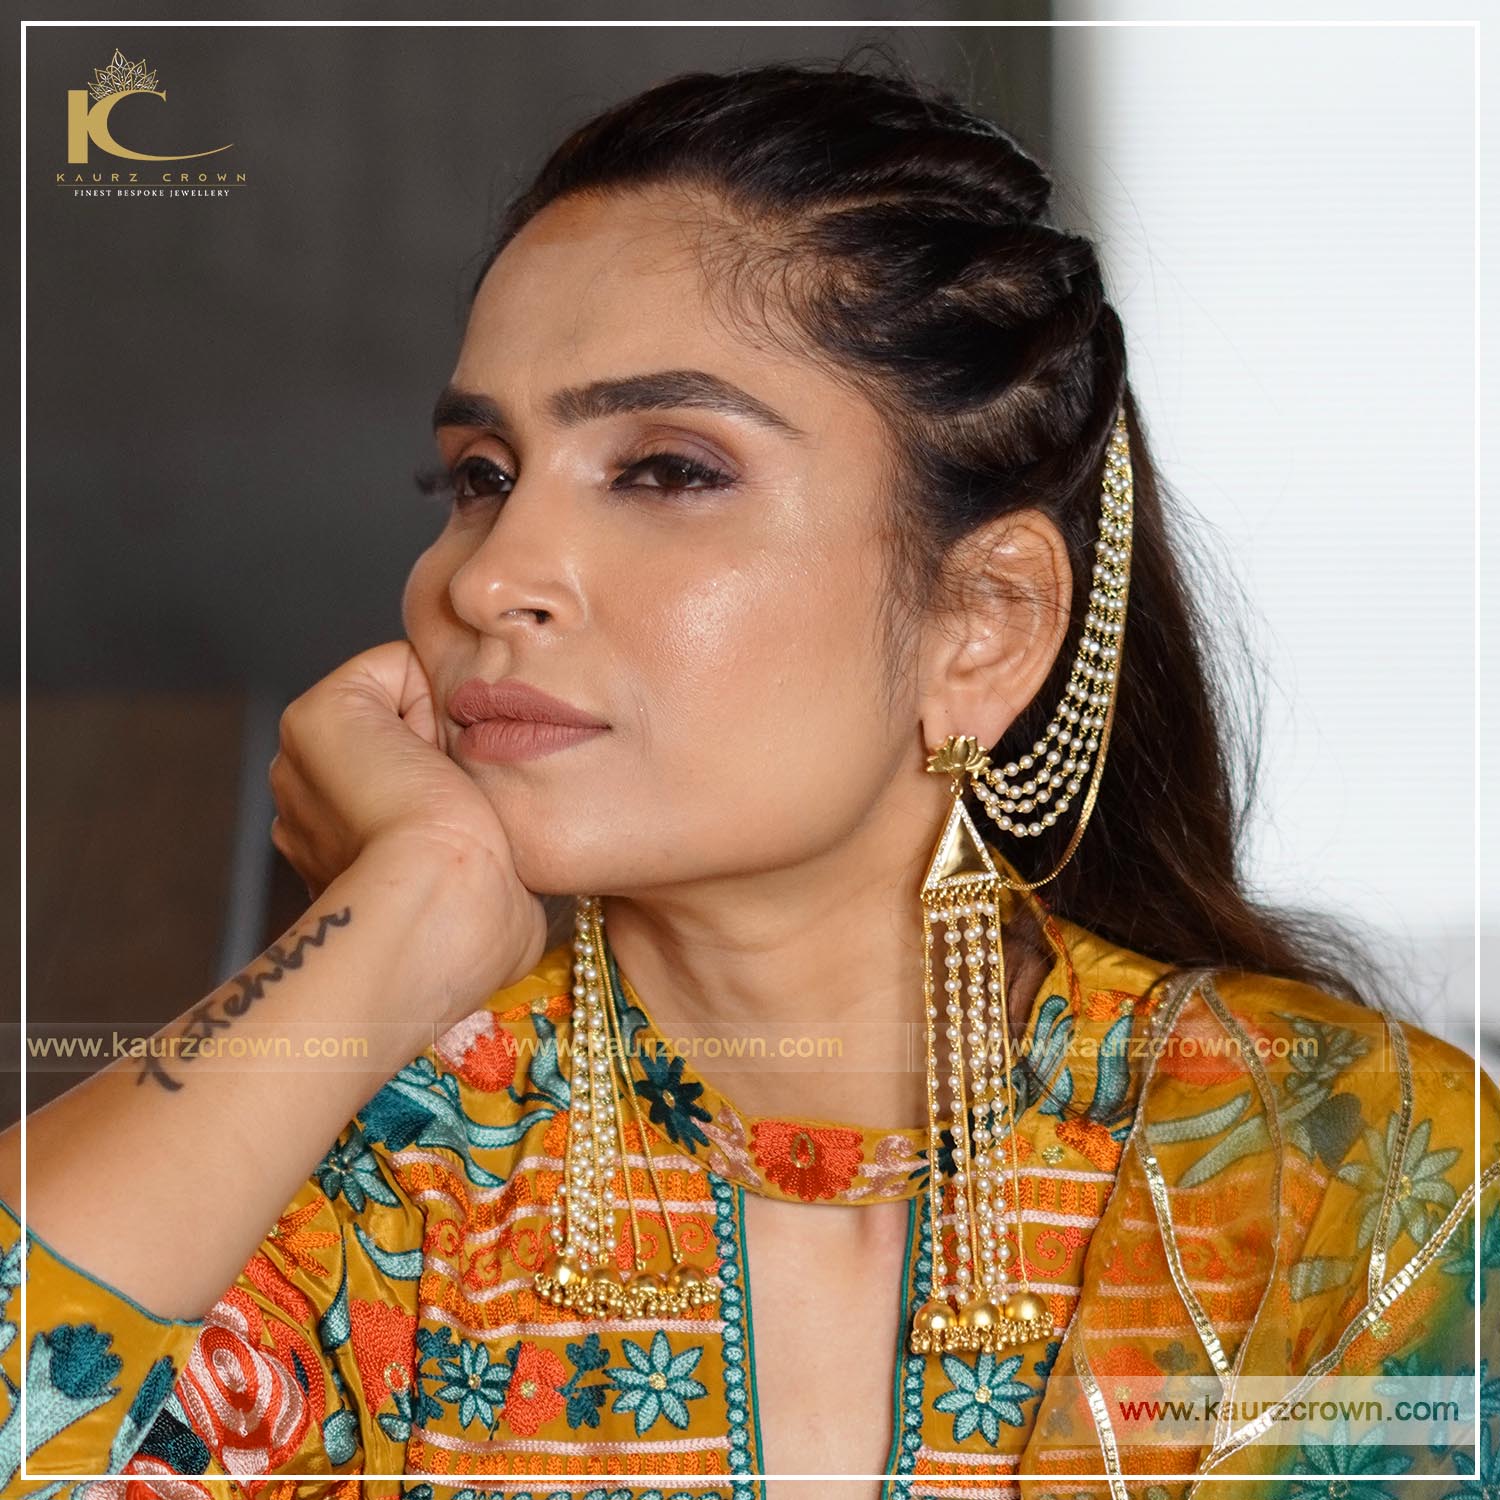 Sahar Earrings , kaurz crown , punjabi jewellery , online jewellery store , sahar earrings , kaurz crown jewellery store